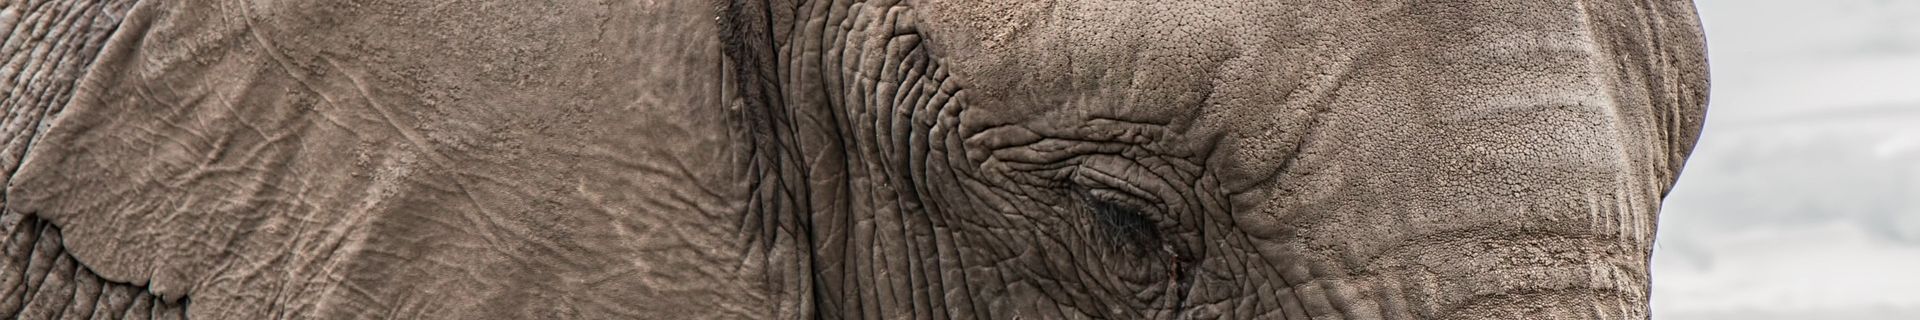 Elefant Dickhäuter Tansania Nahaufnahme